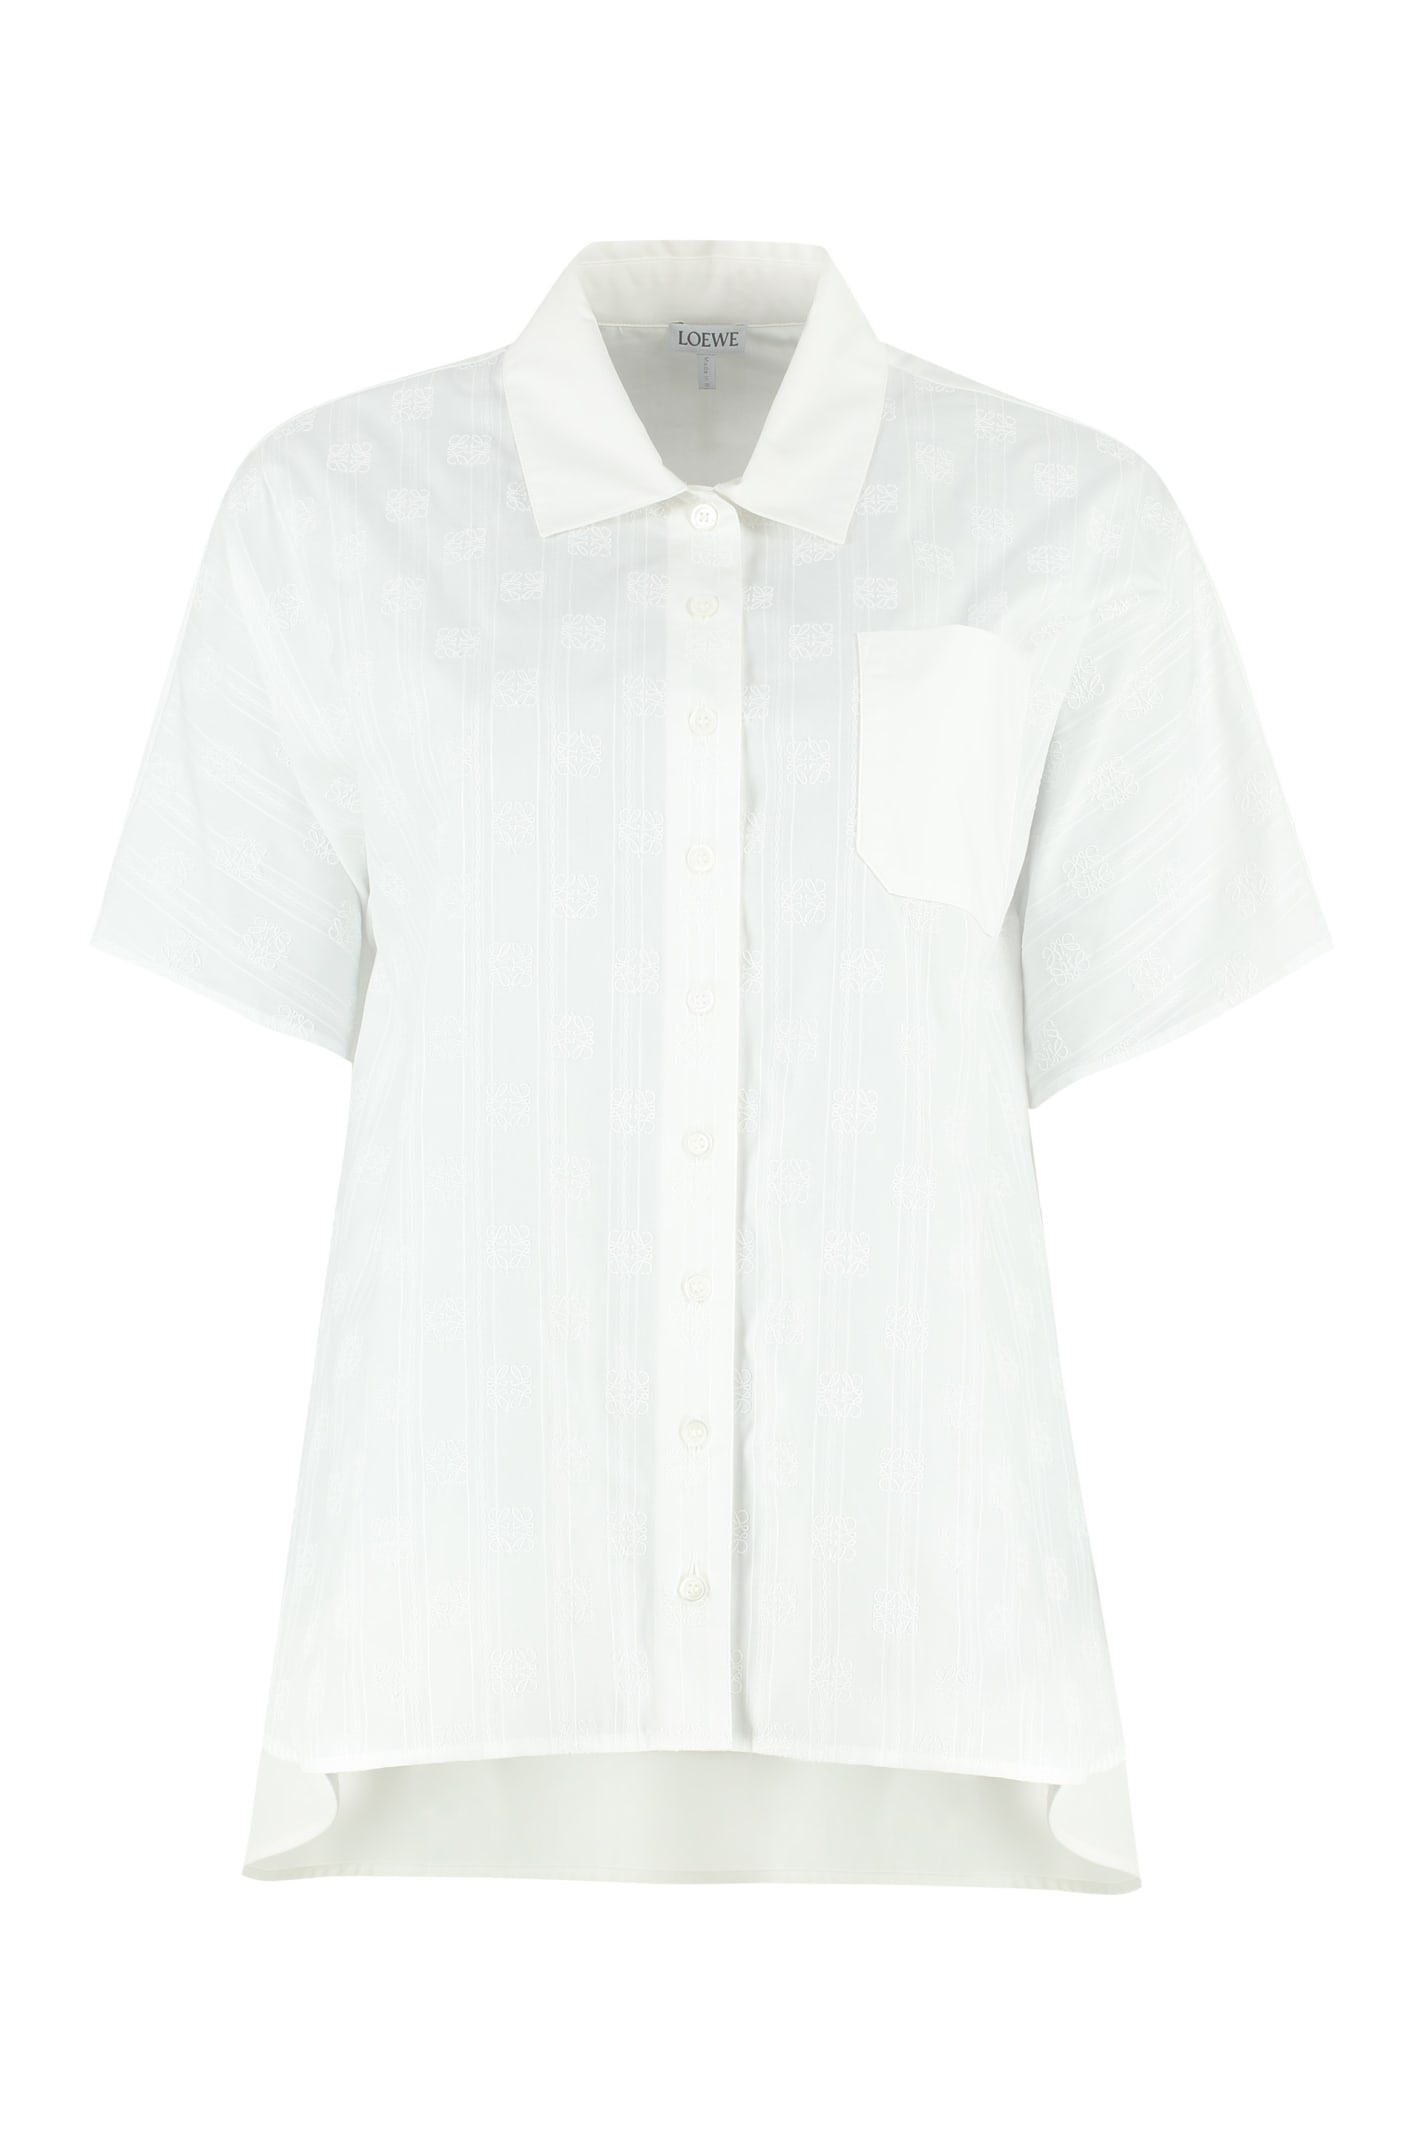 Loewe Short Sleeve Cotton Shirt